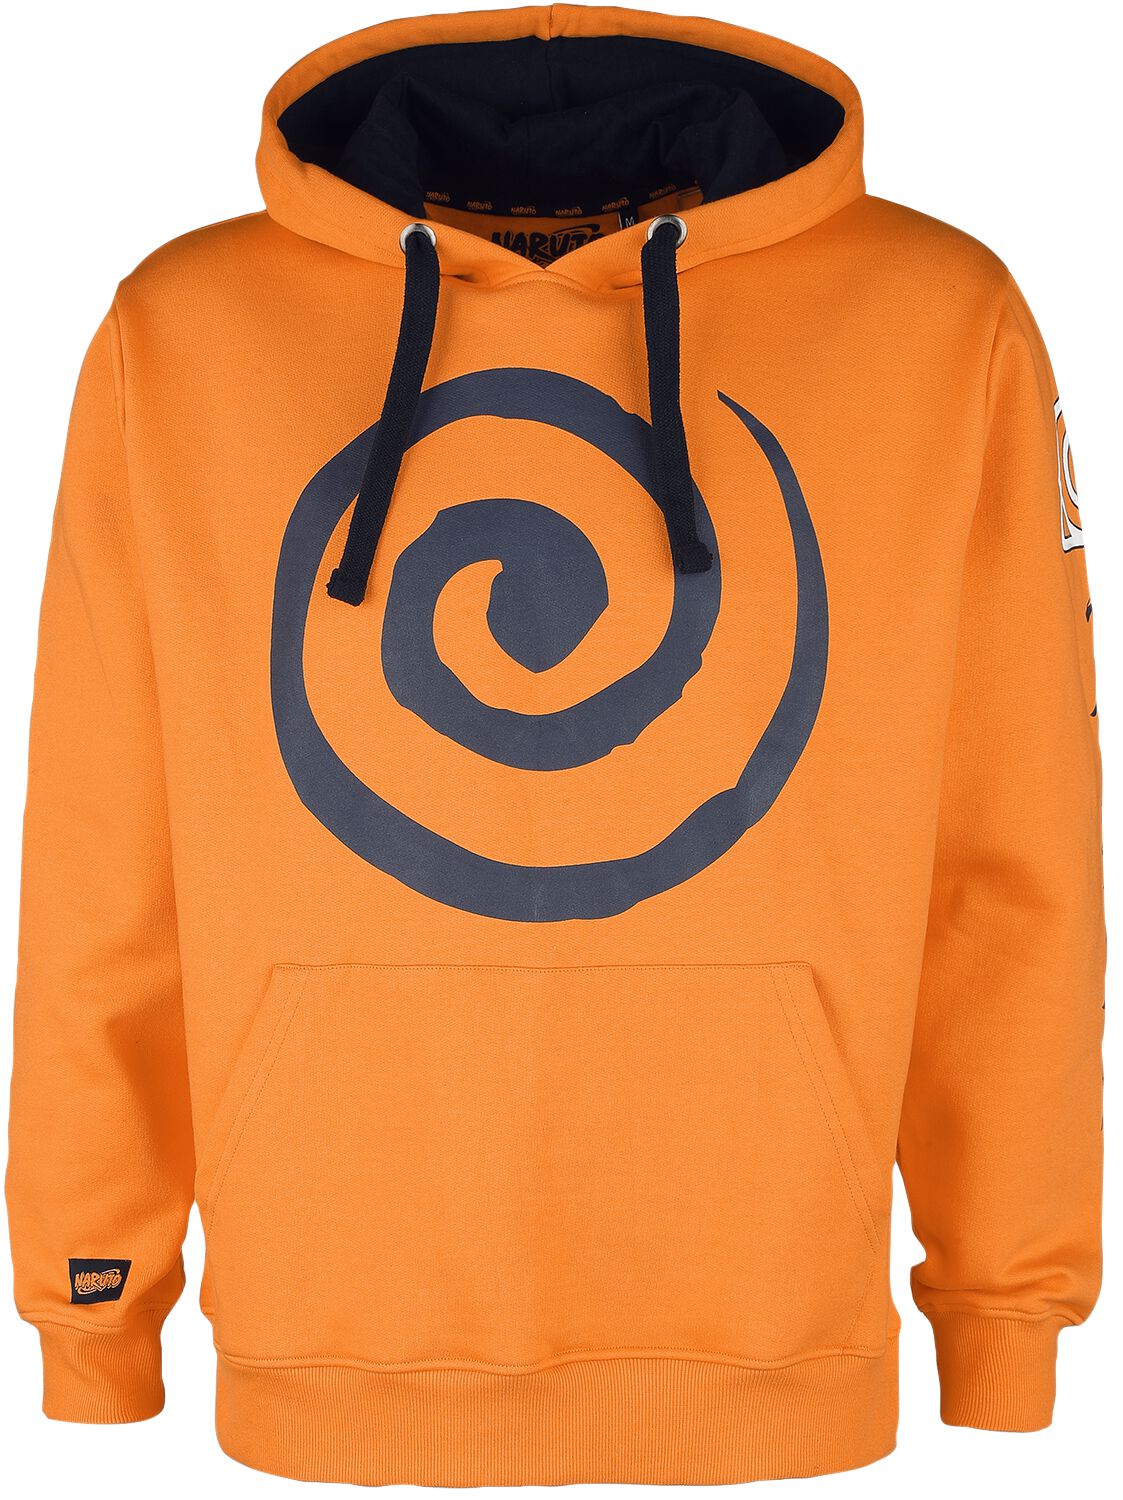 Sweat plaid - Naruto - Konoha logo - Au Comptoir des Sorciers